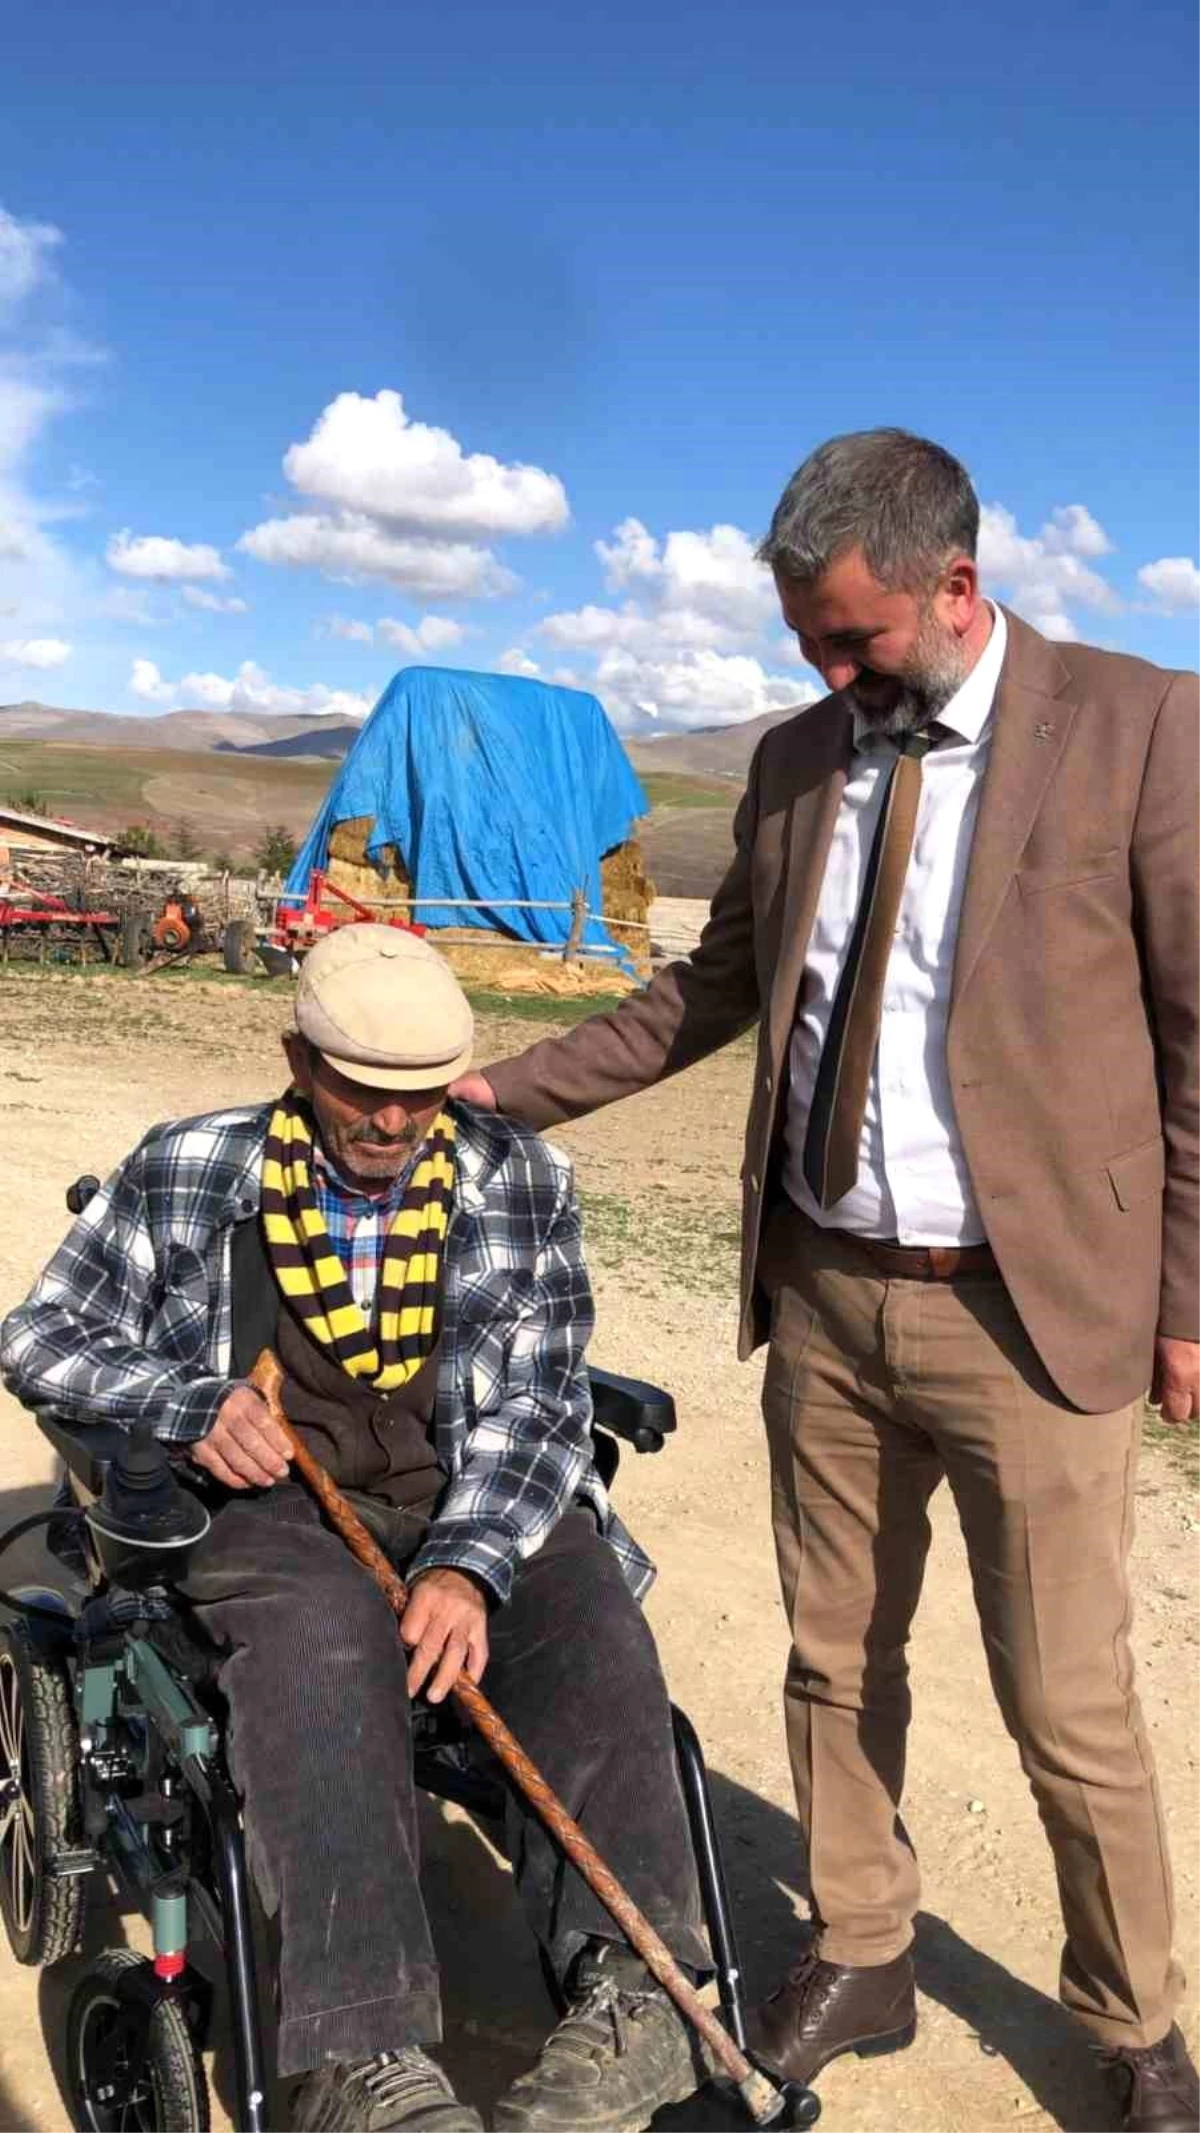 Engelli Vatandaş, Akülü Araba İsteyen AK Partili Yetkililere Oy Vermeyeceğini Söyledi